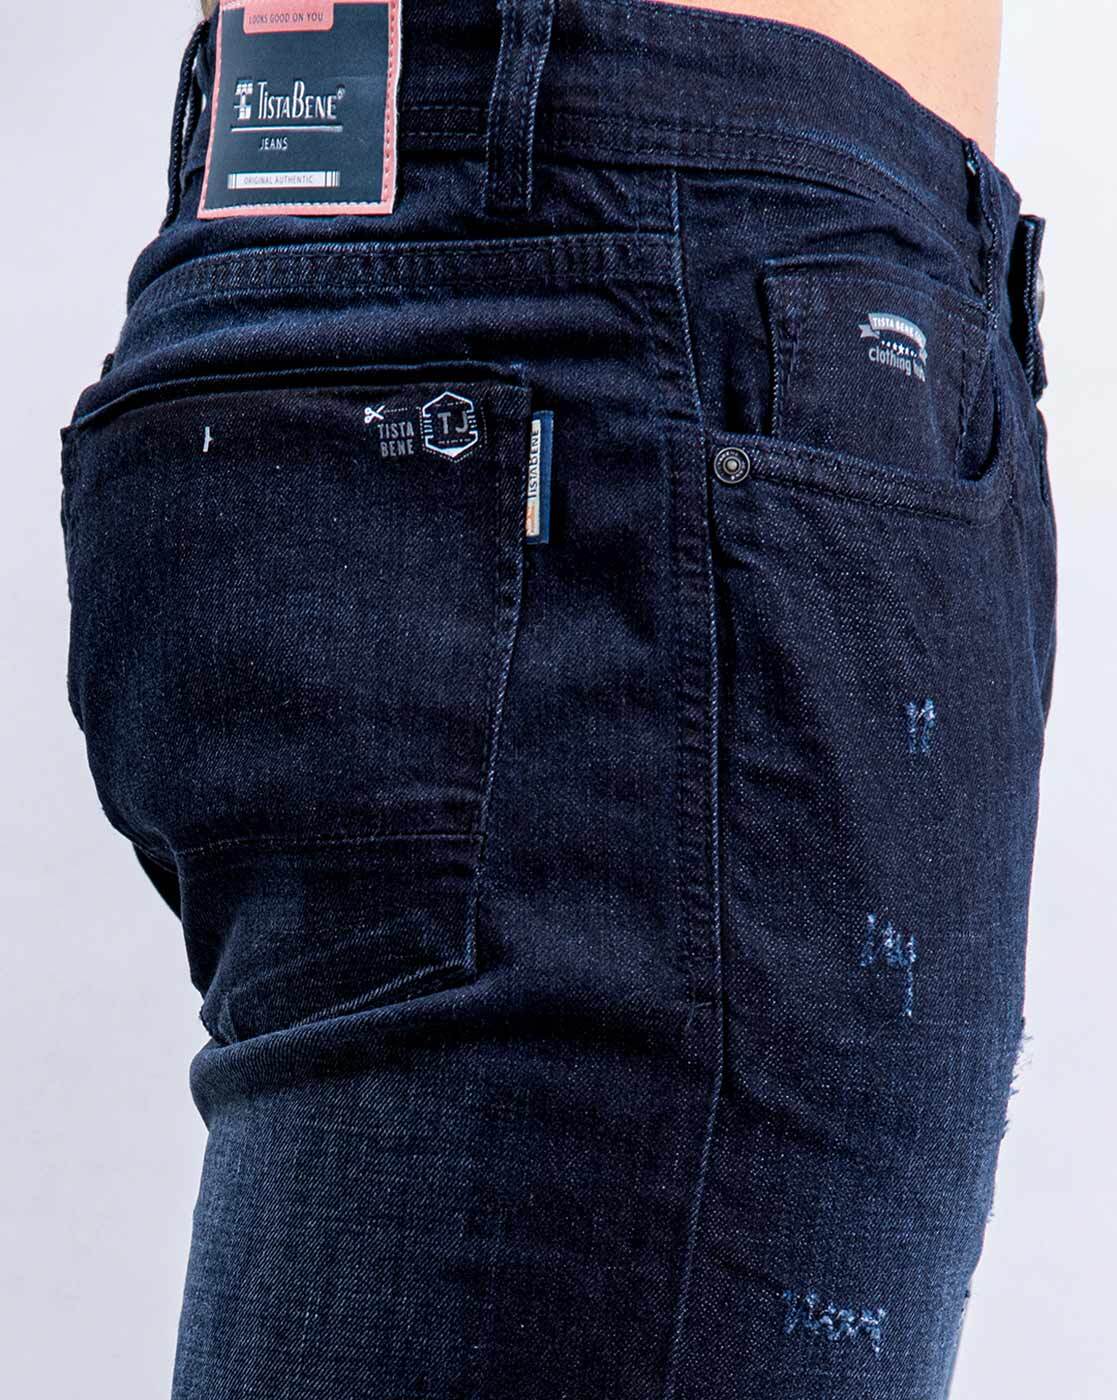 Buy Dark Navy Jeans for Men by Tistabene Online